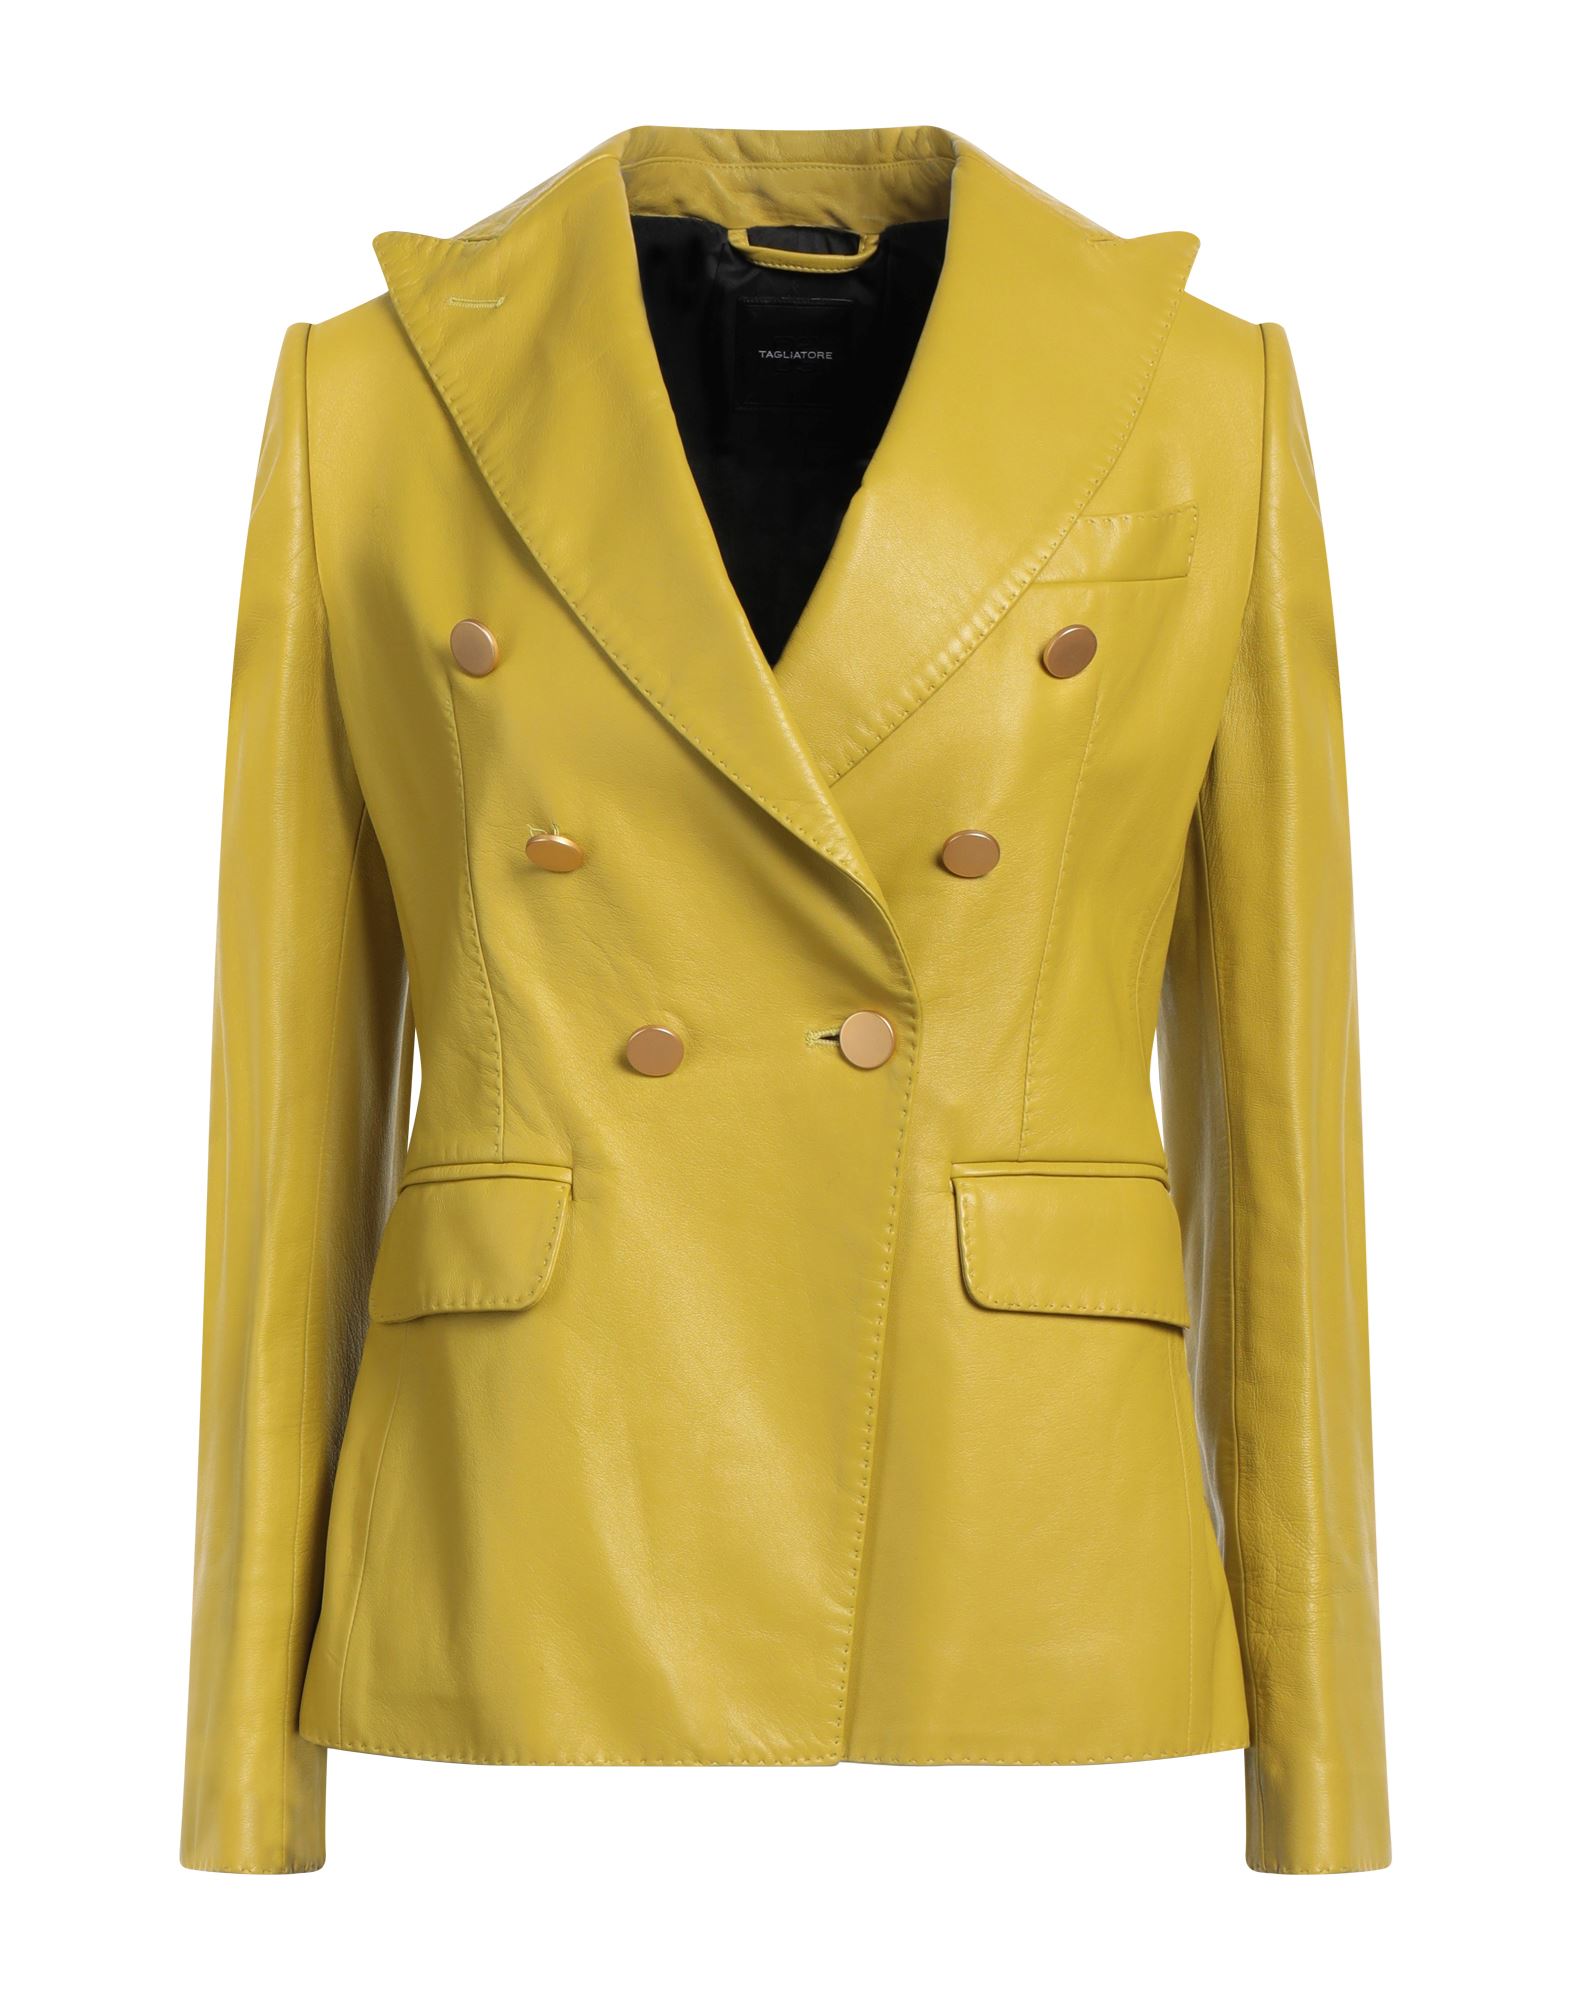 Tagliatore 02-05 Suit Jackets In Mustard